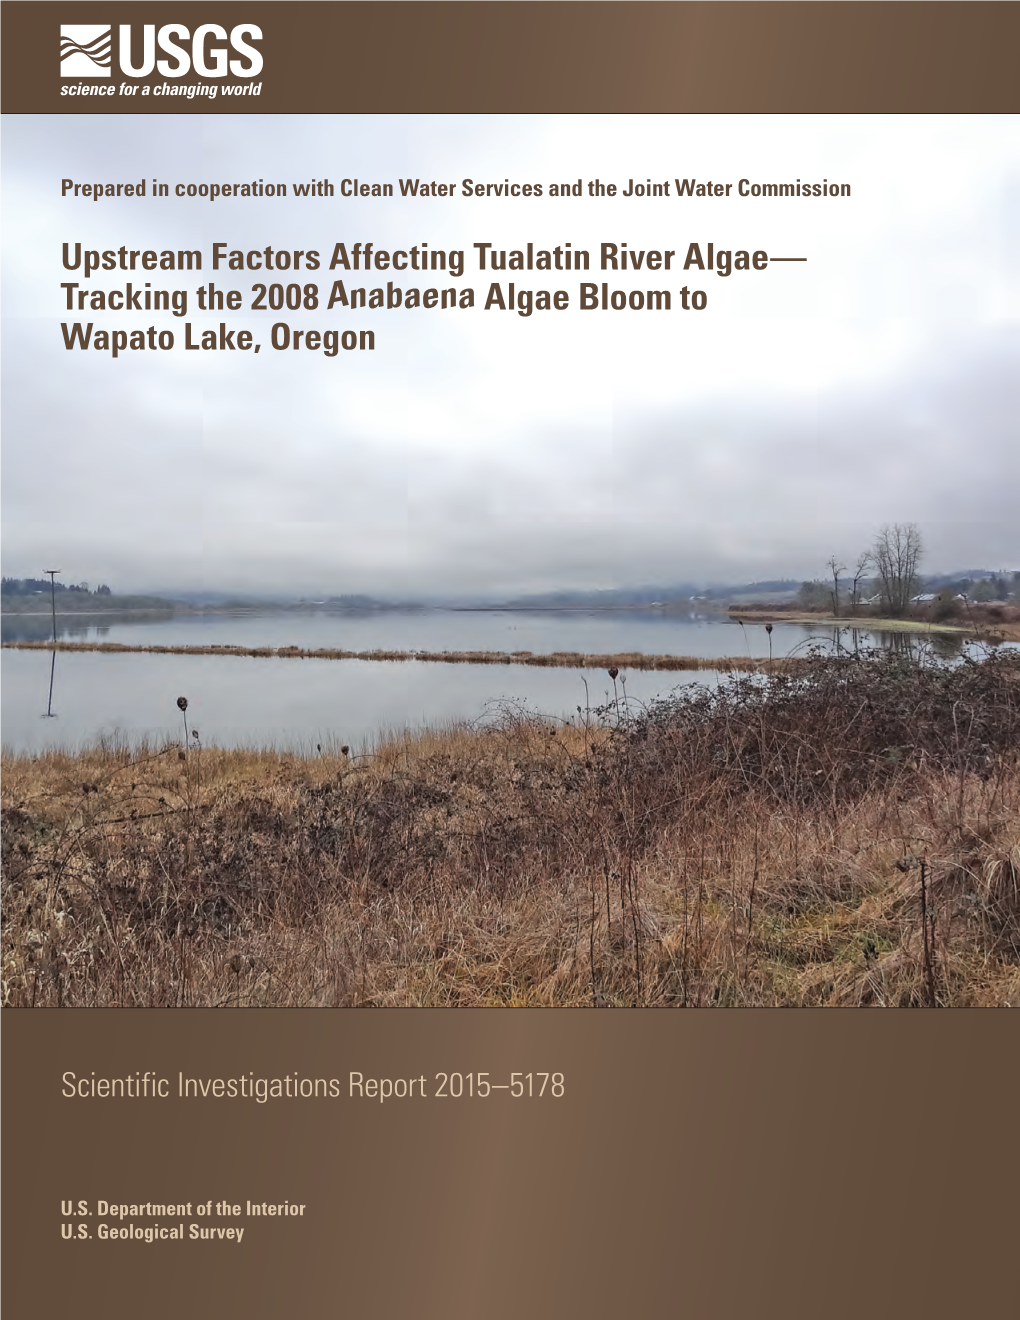 Upstream Factors Affecting Tualatin River Algae—Tracking the 2008 Anabaena Algae Bloom to Wapato Lake, Oregon